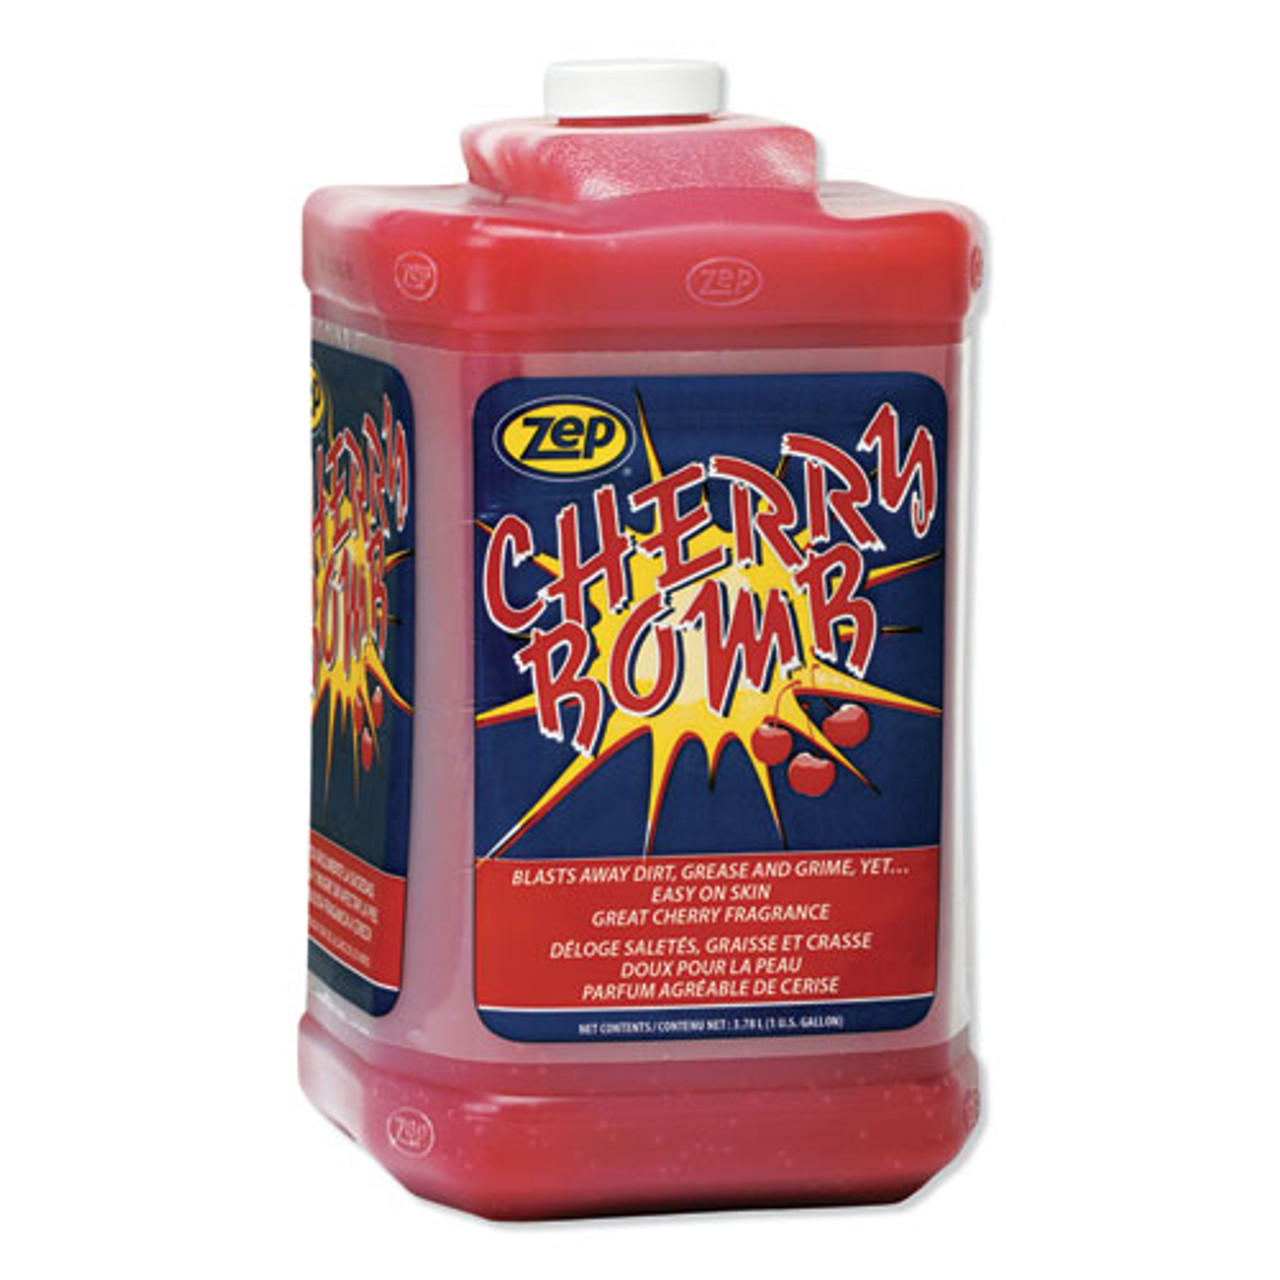 Zep Cherry Scent Cherry Bomb Hand Cleaner, 1 Gallon Bottle